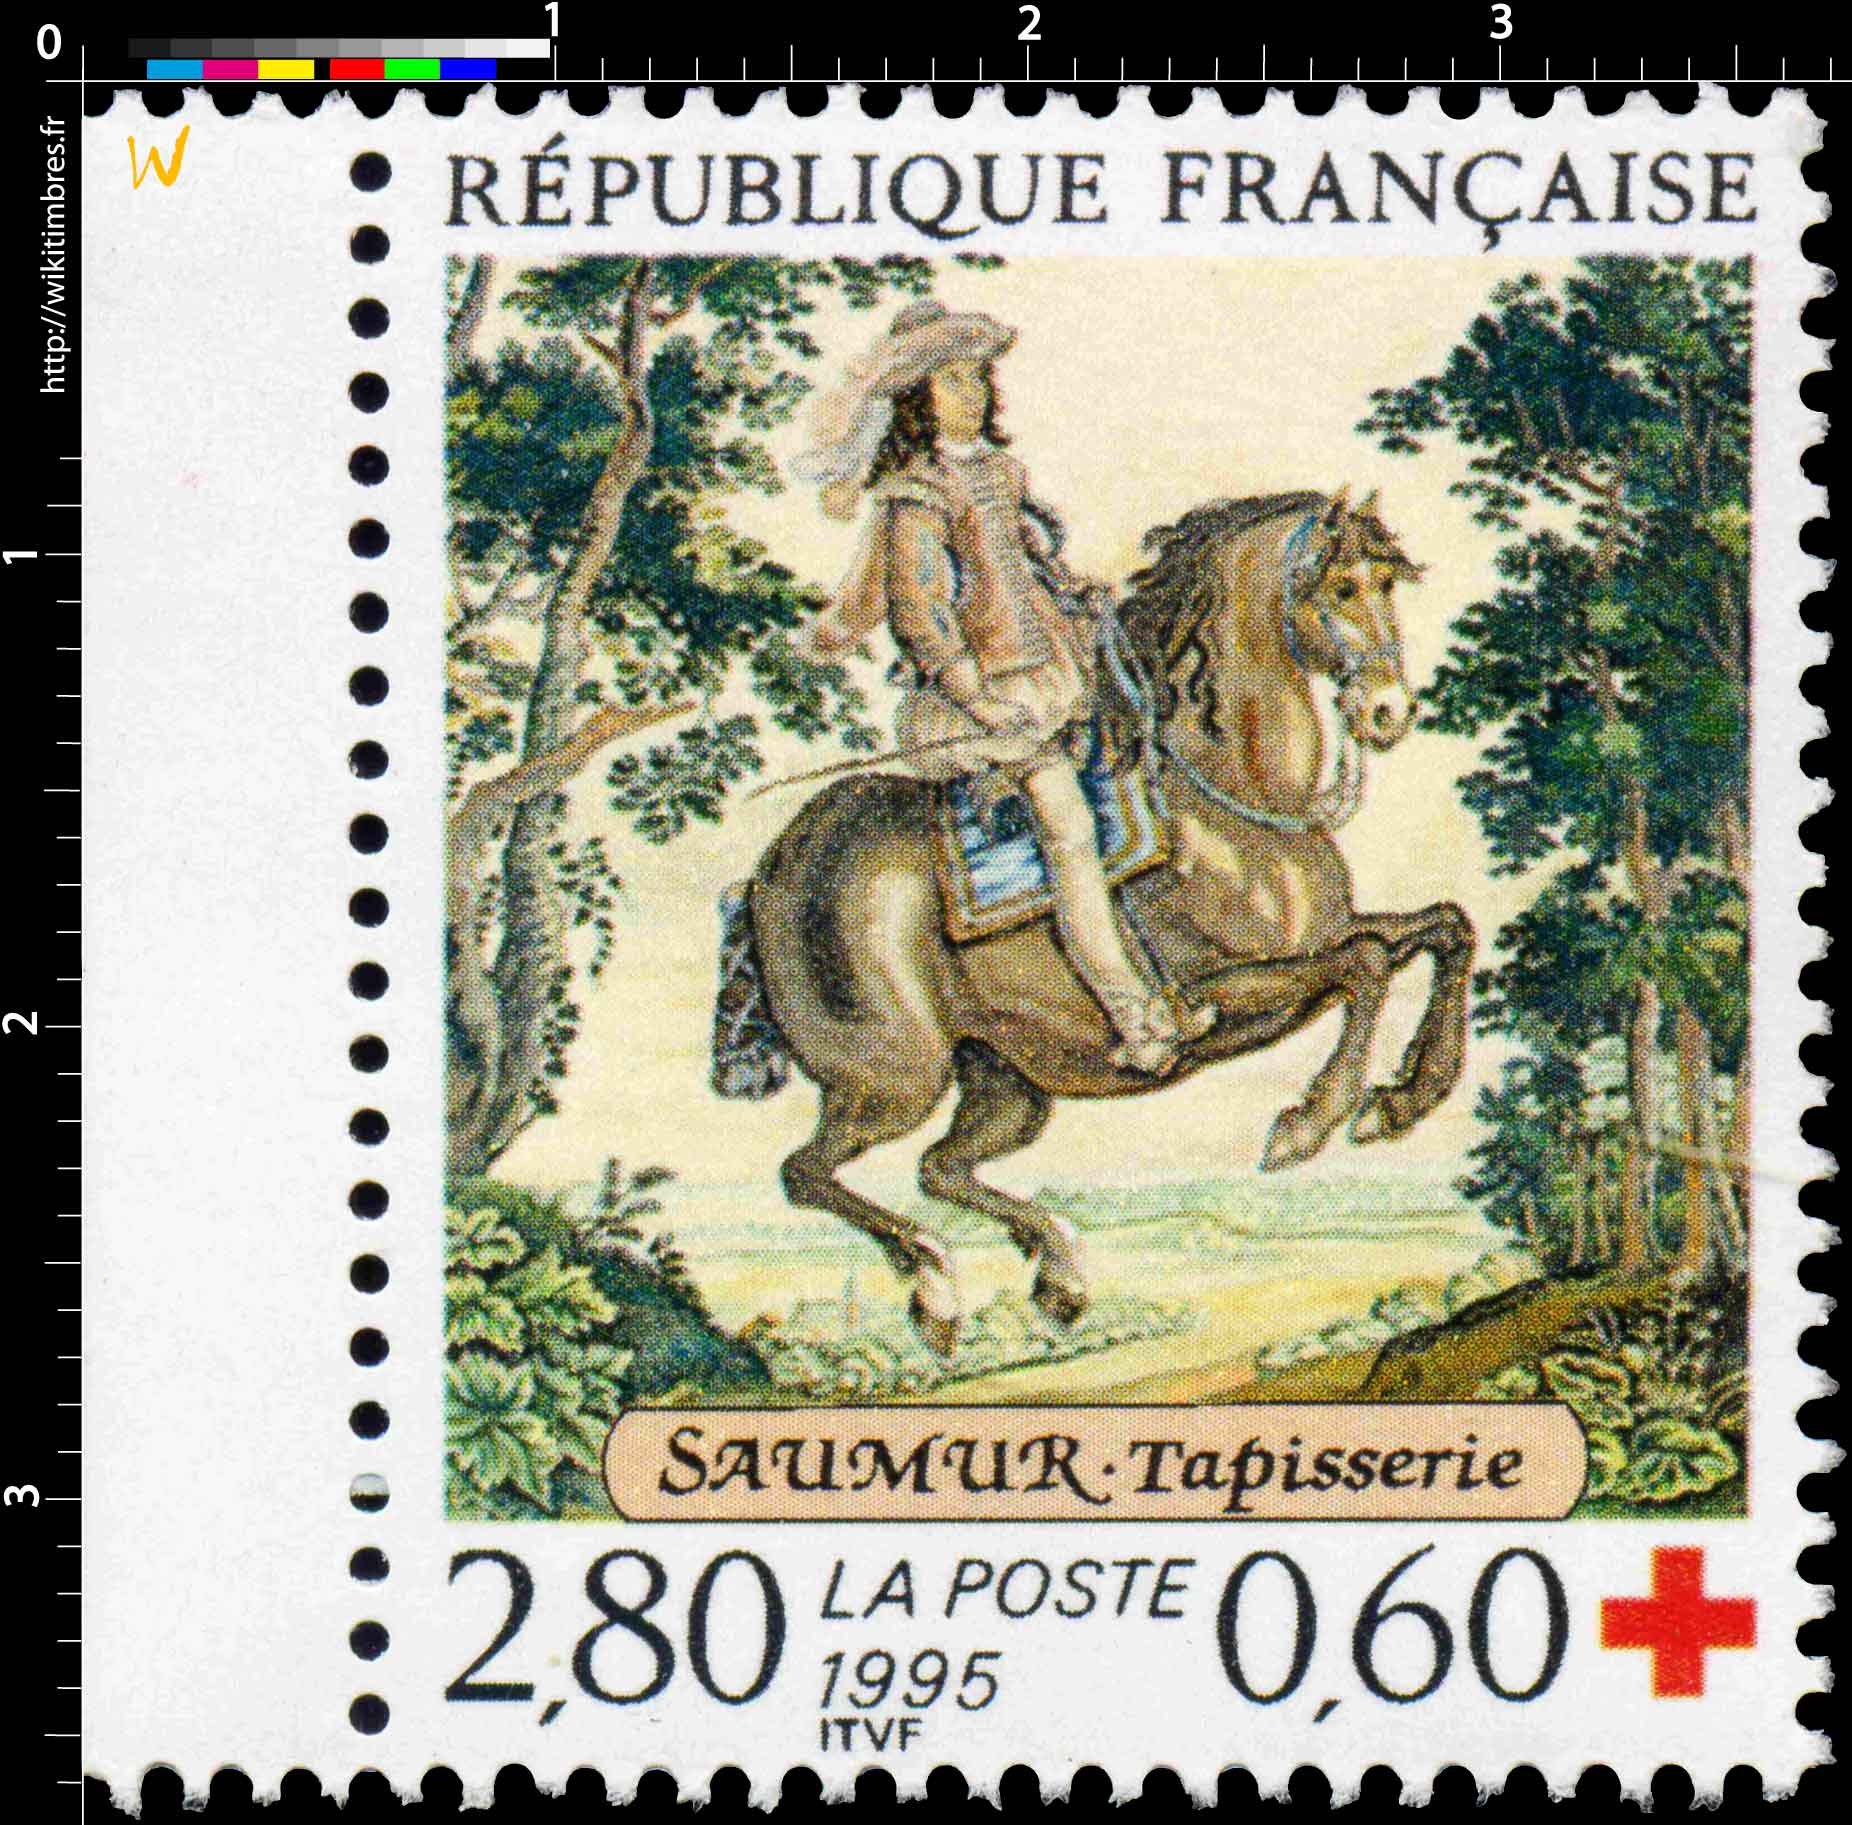 1995 SAUMUR - Tapisserie